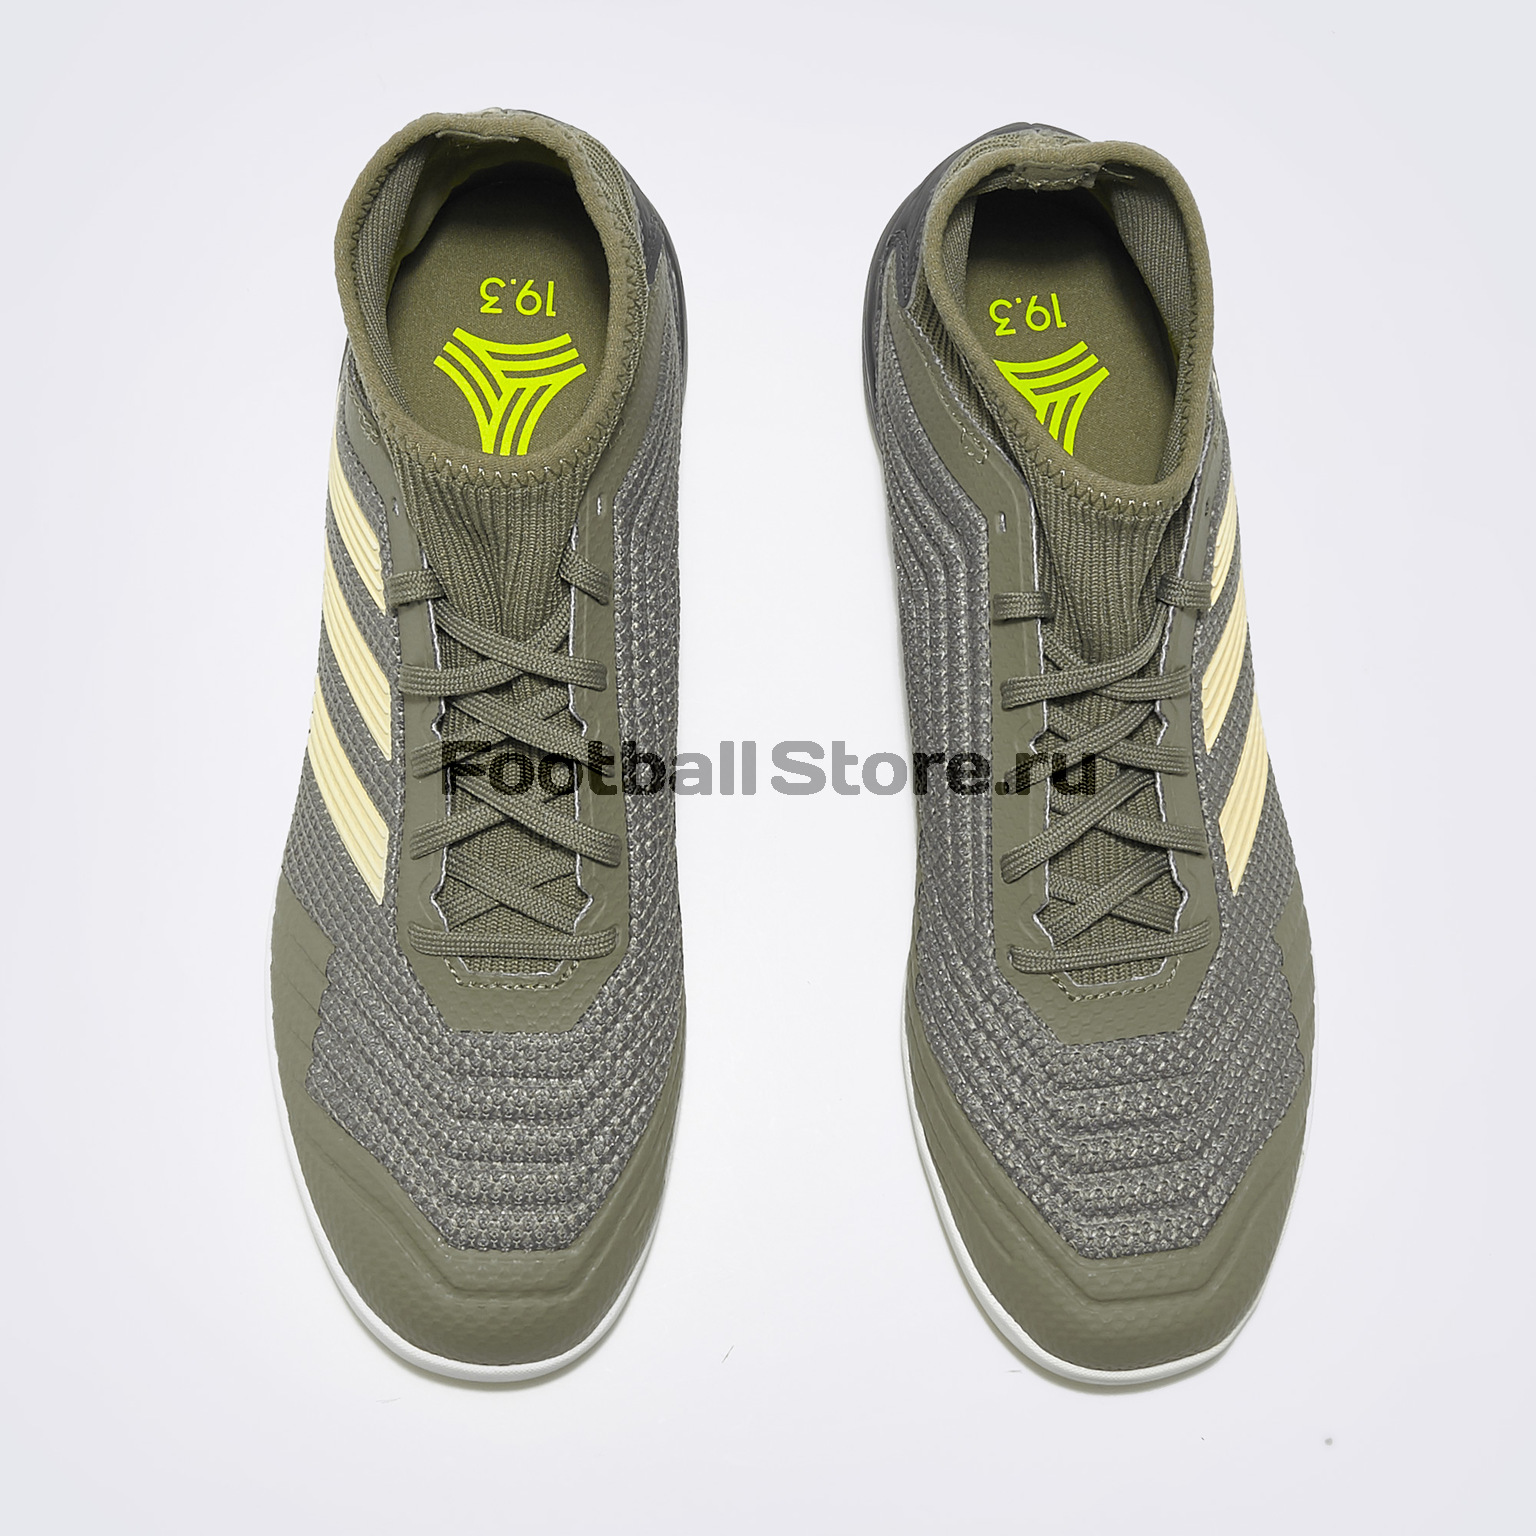 Футзалки Adidas Predator 19.3 IN EF8209